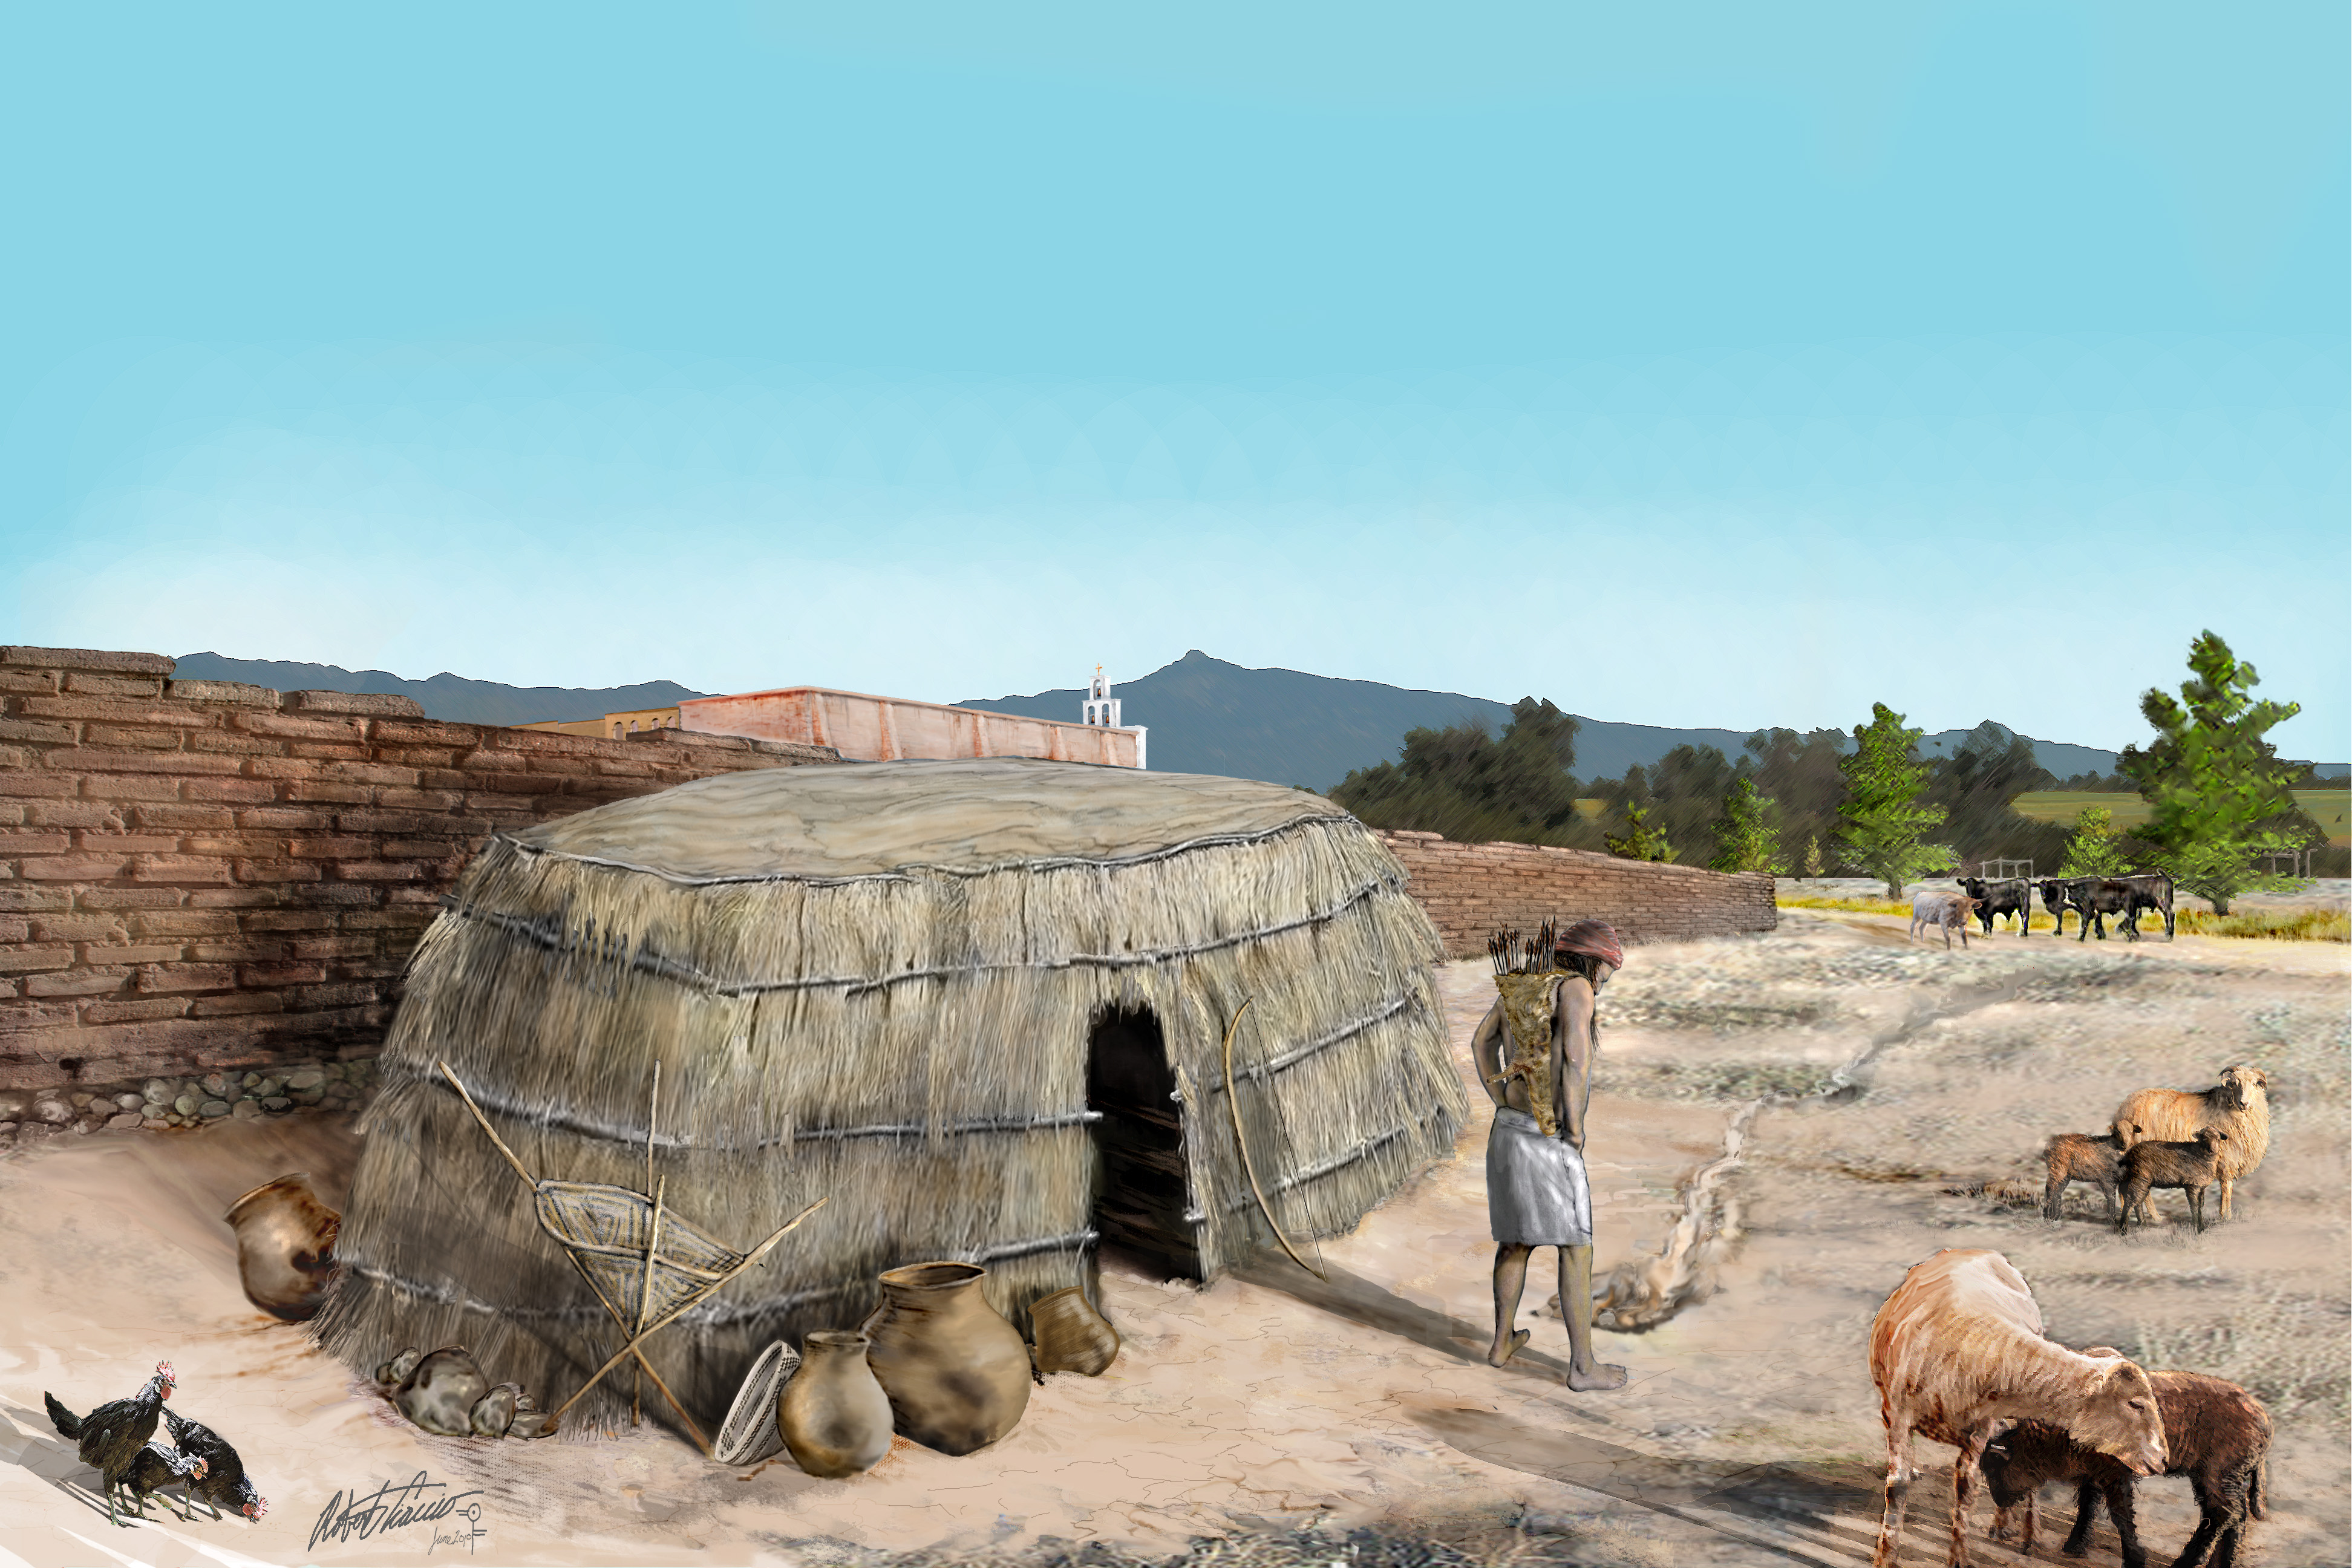 Desert Archaeology cultural resources management CRM graphics illustration photography services tucson arizona